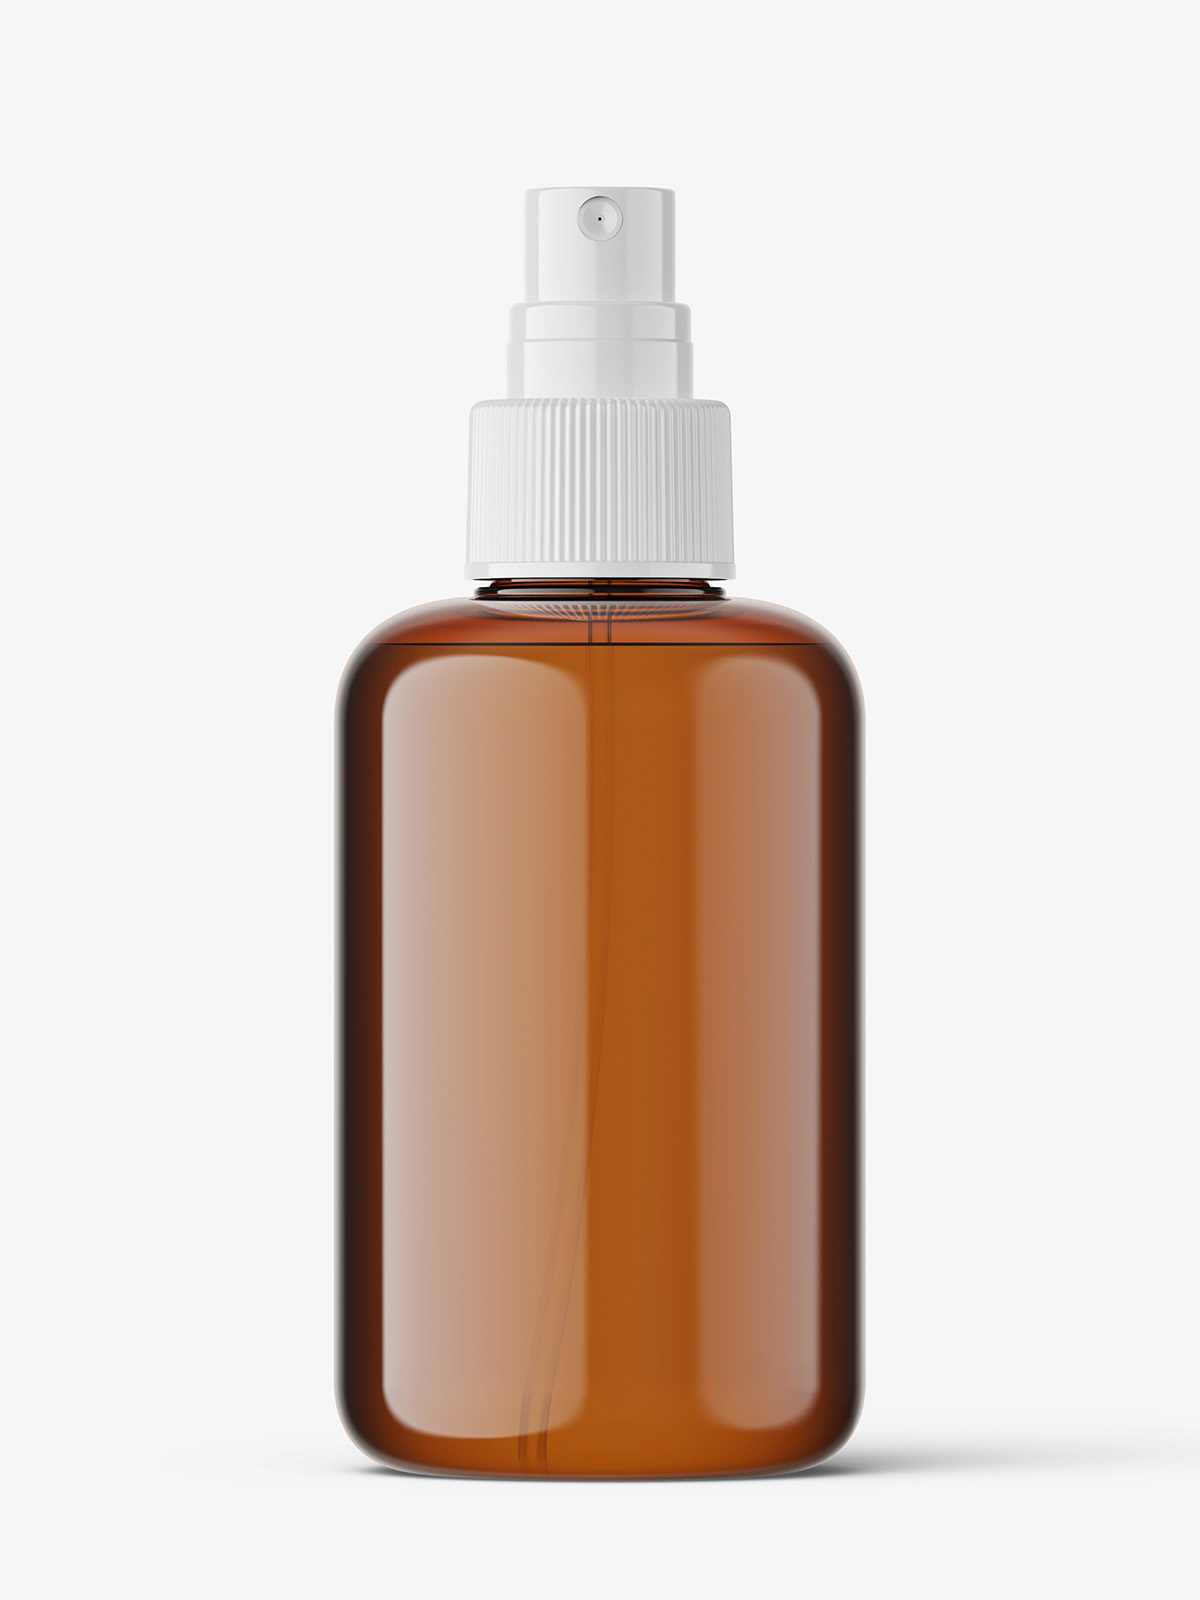 Spray bottle mockup / amber - Smarty Mockups